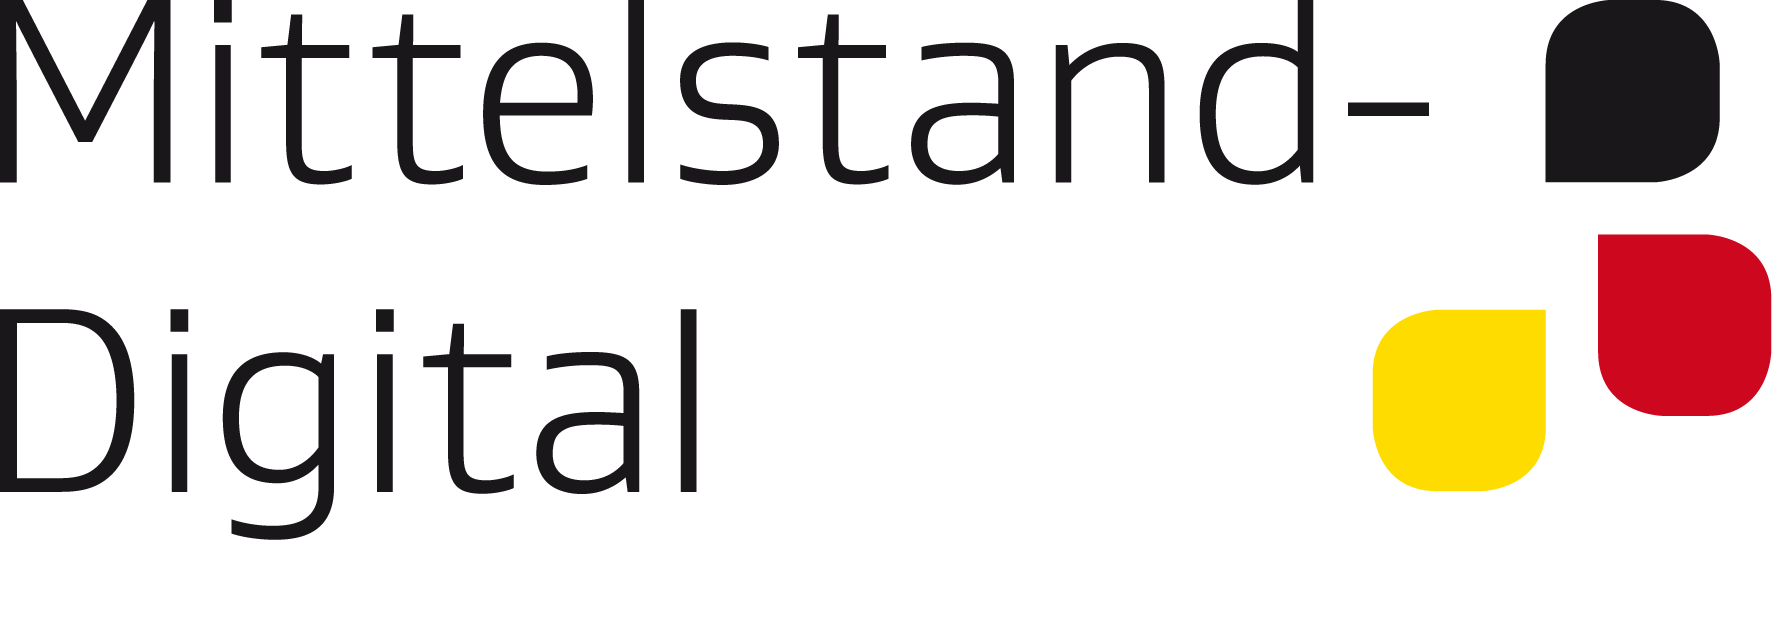 Mittelstand Digital Logo